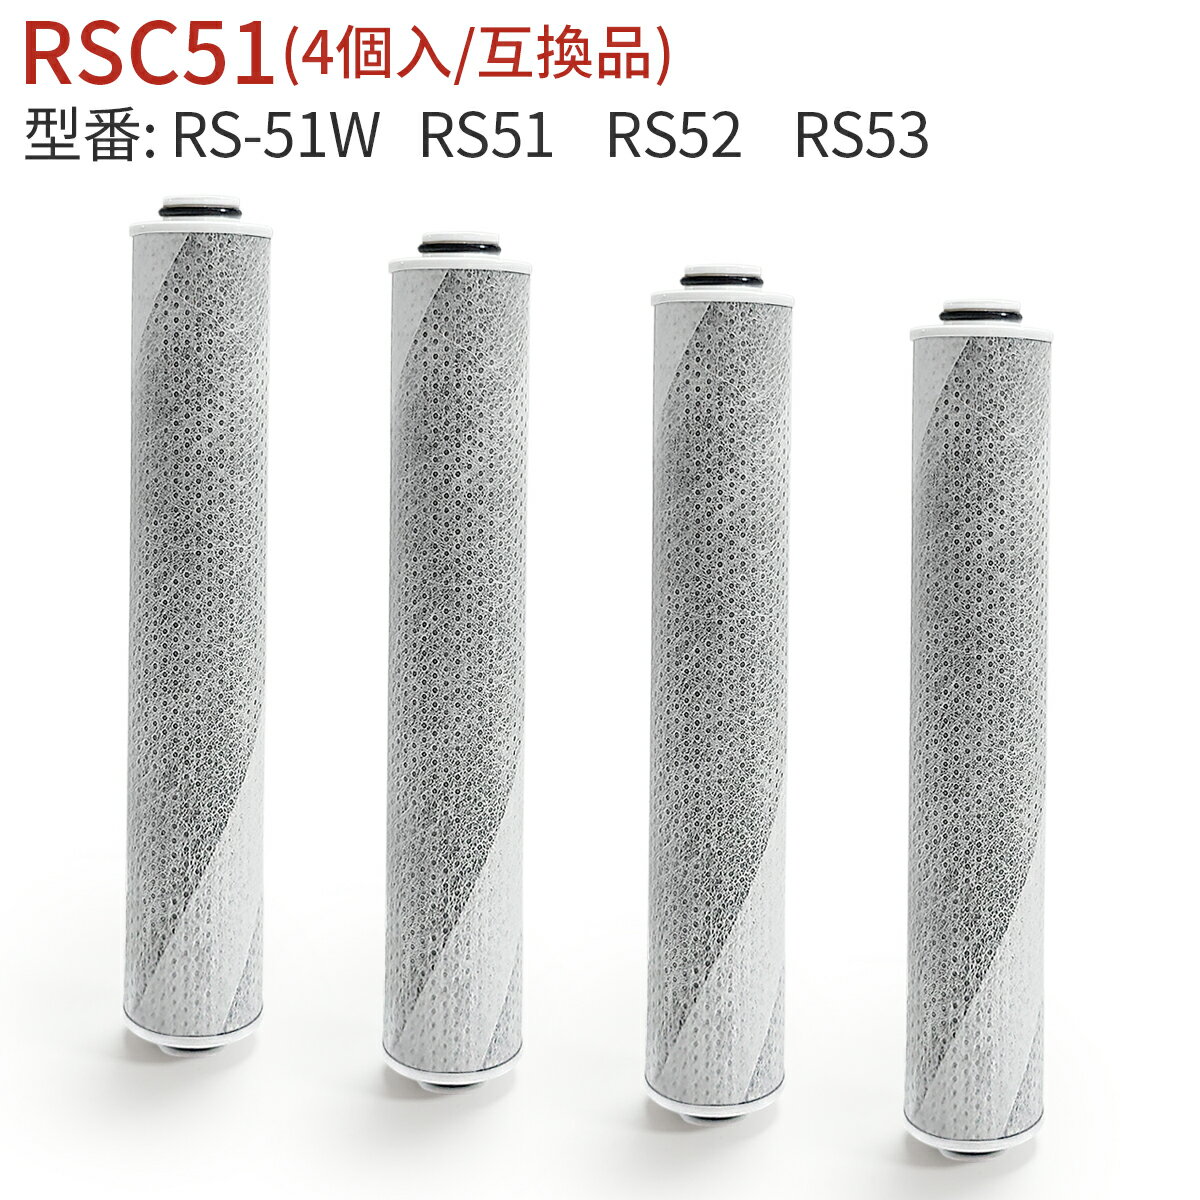 rsc51-4 浄水シャワーヘッド 交換カートリッジ 浄水シャワー カートリッジ rs51 rs52 rs53 交換用カートリッジ 塩素除去「互換品/4個セット」